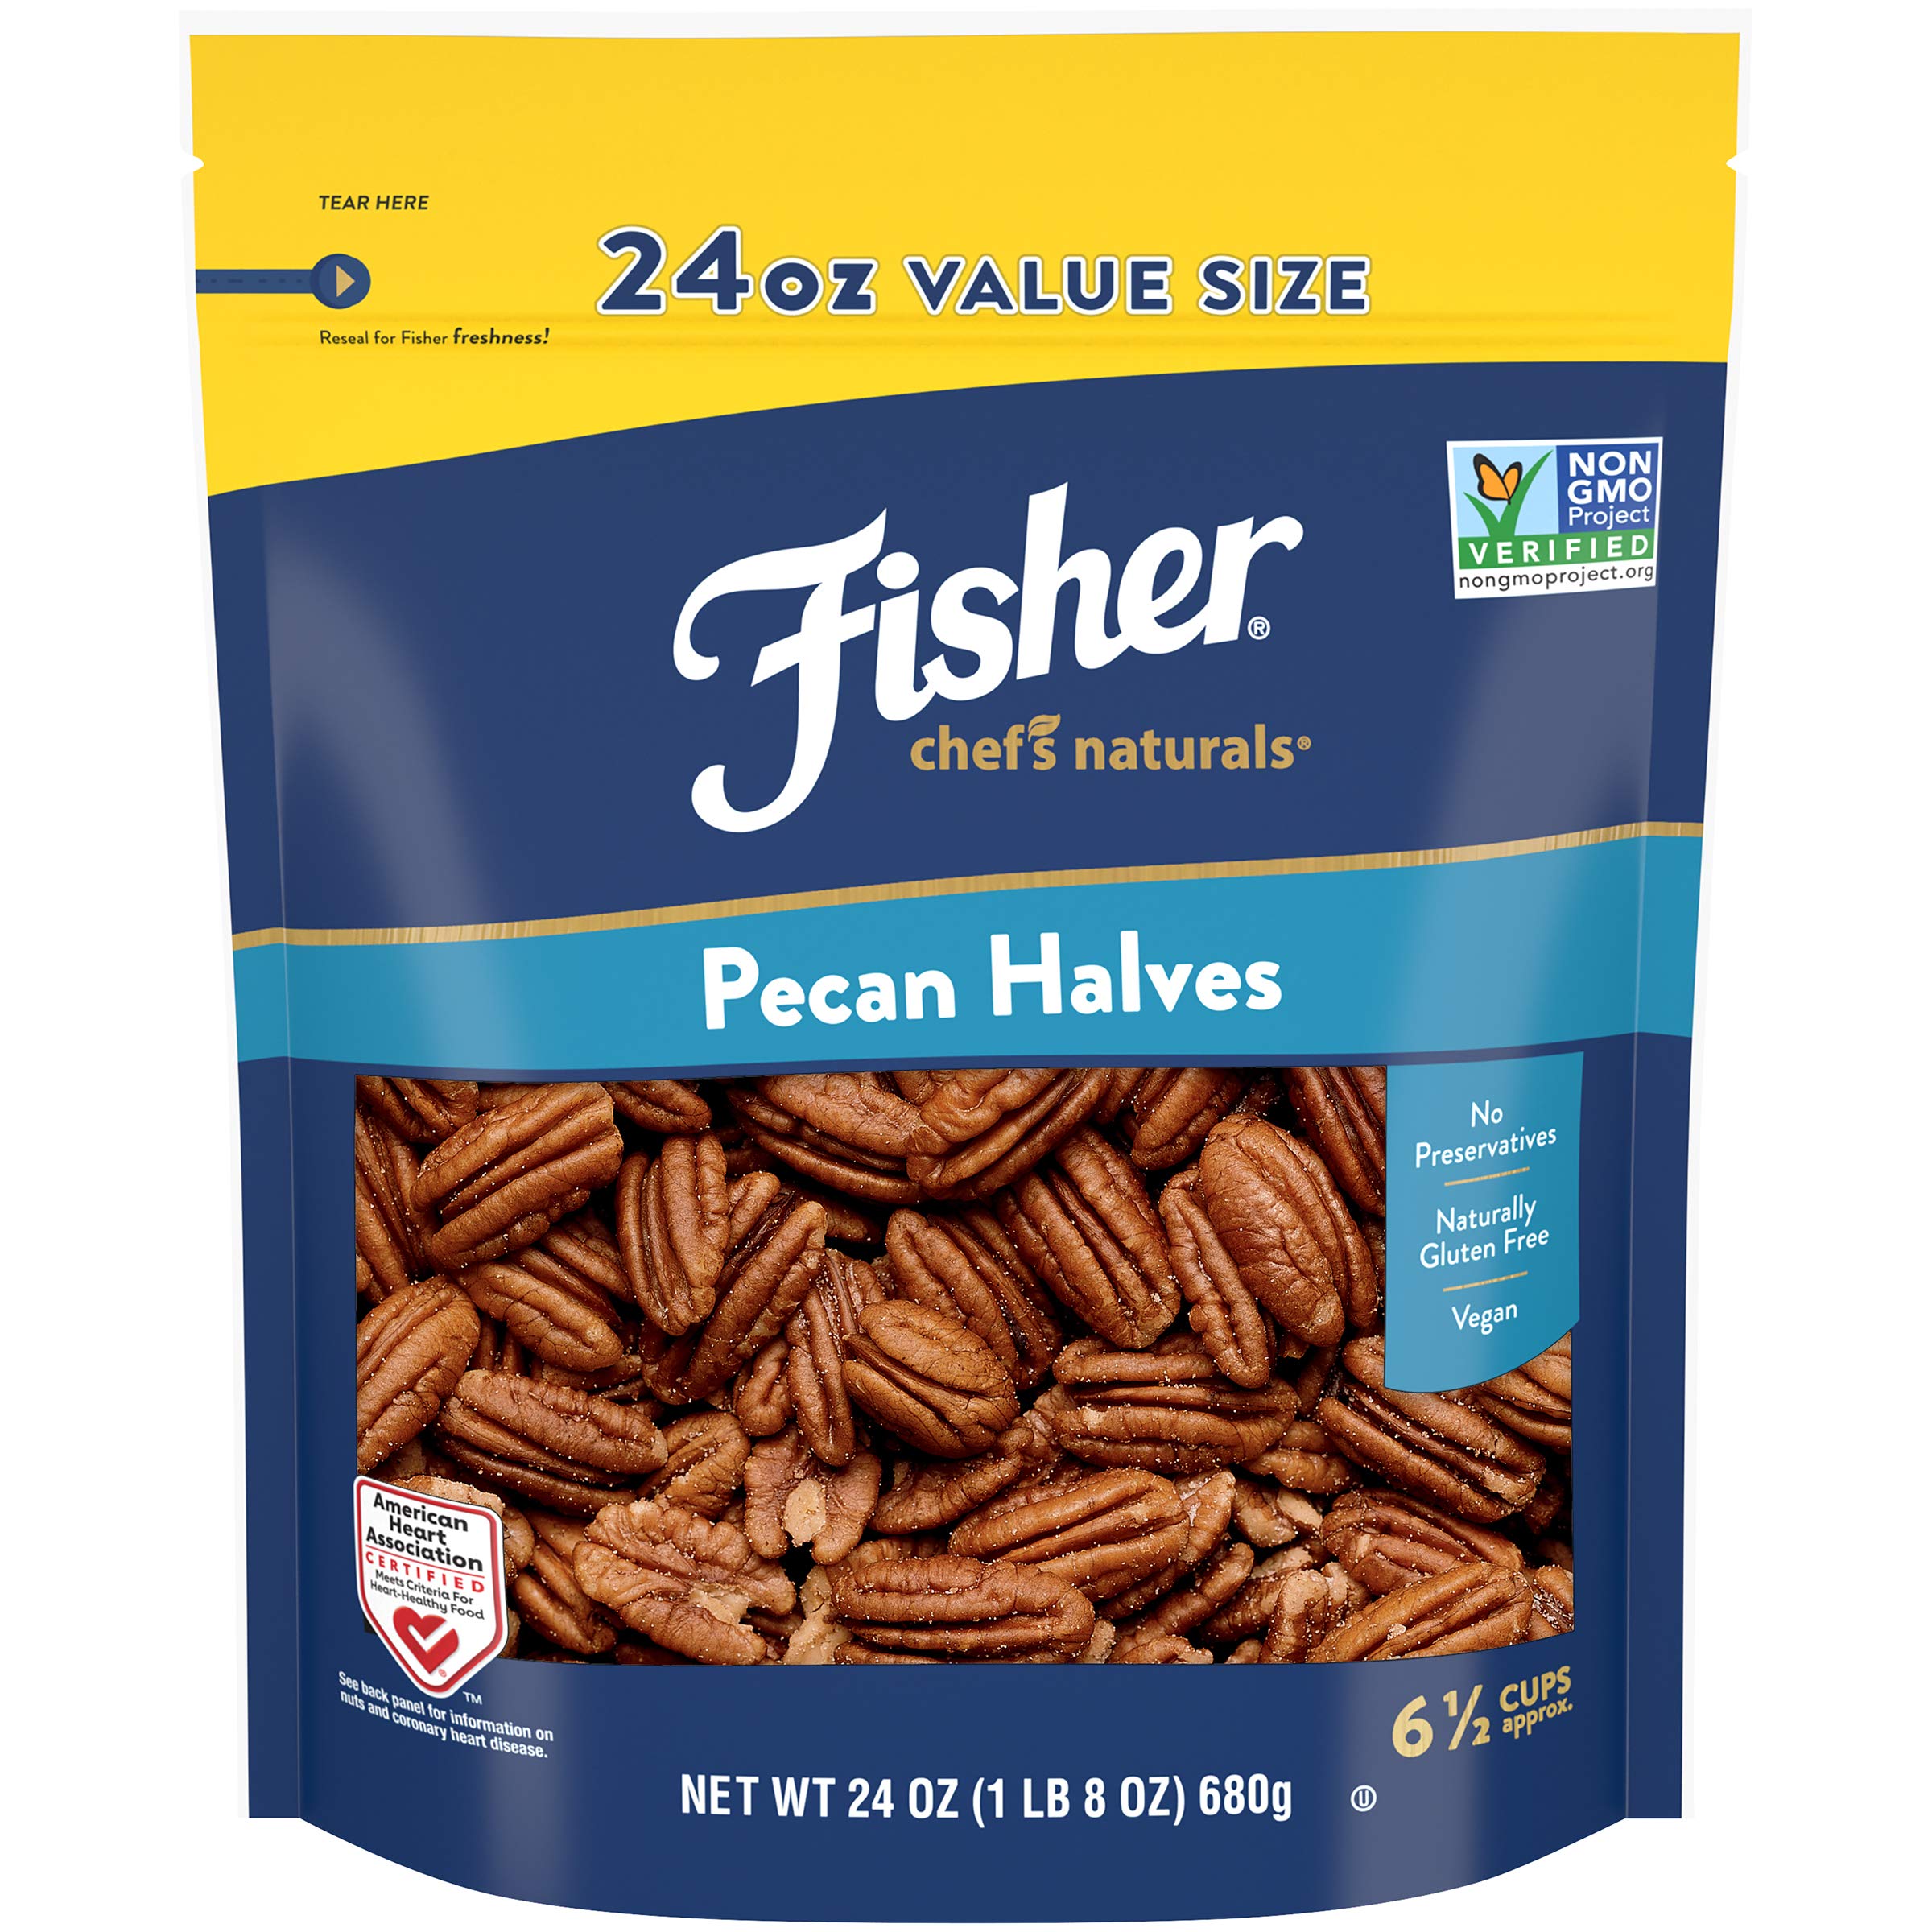 Fisher Chef's Naturals Pecan Halves 24oz Raw Amazon s&s $10